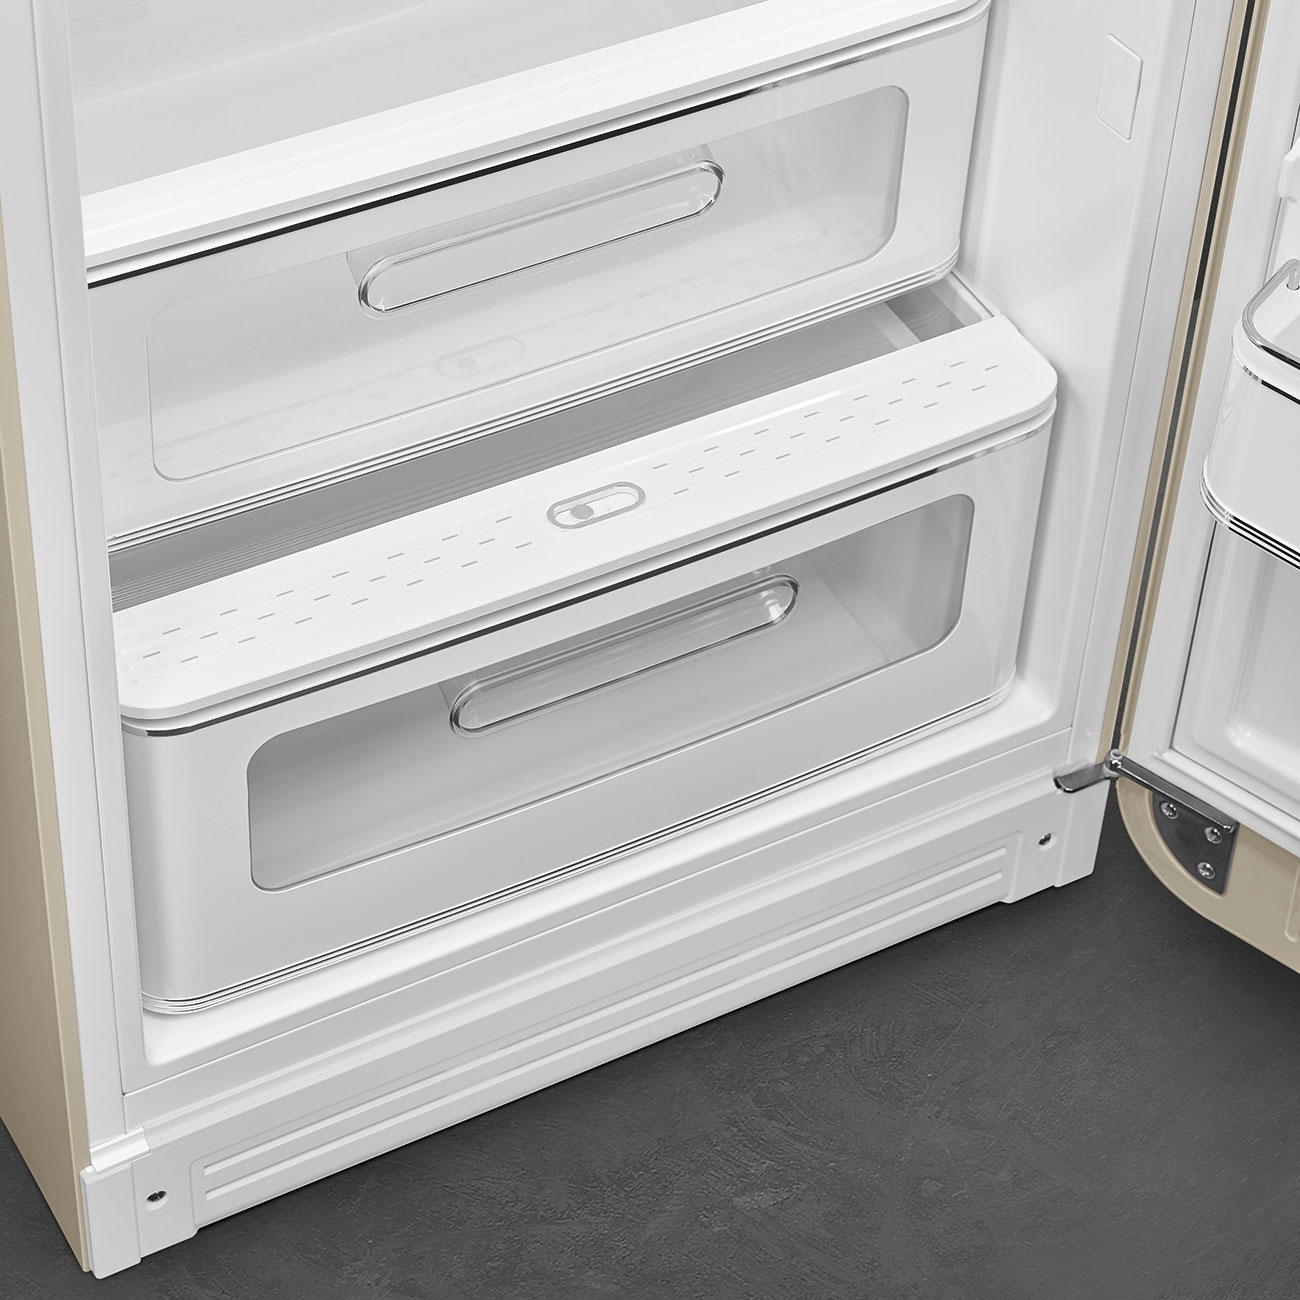 Perfectly Pale refrigerator - Smeg_7